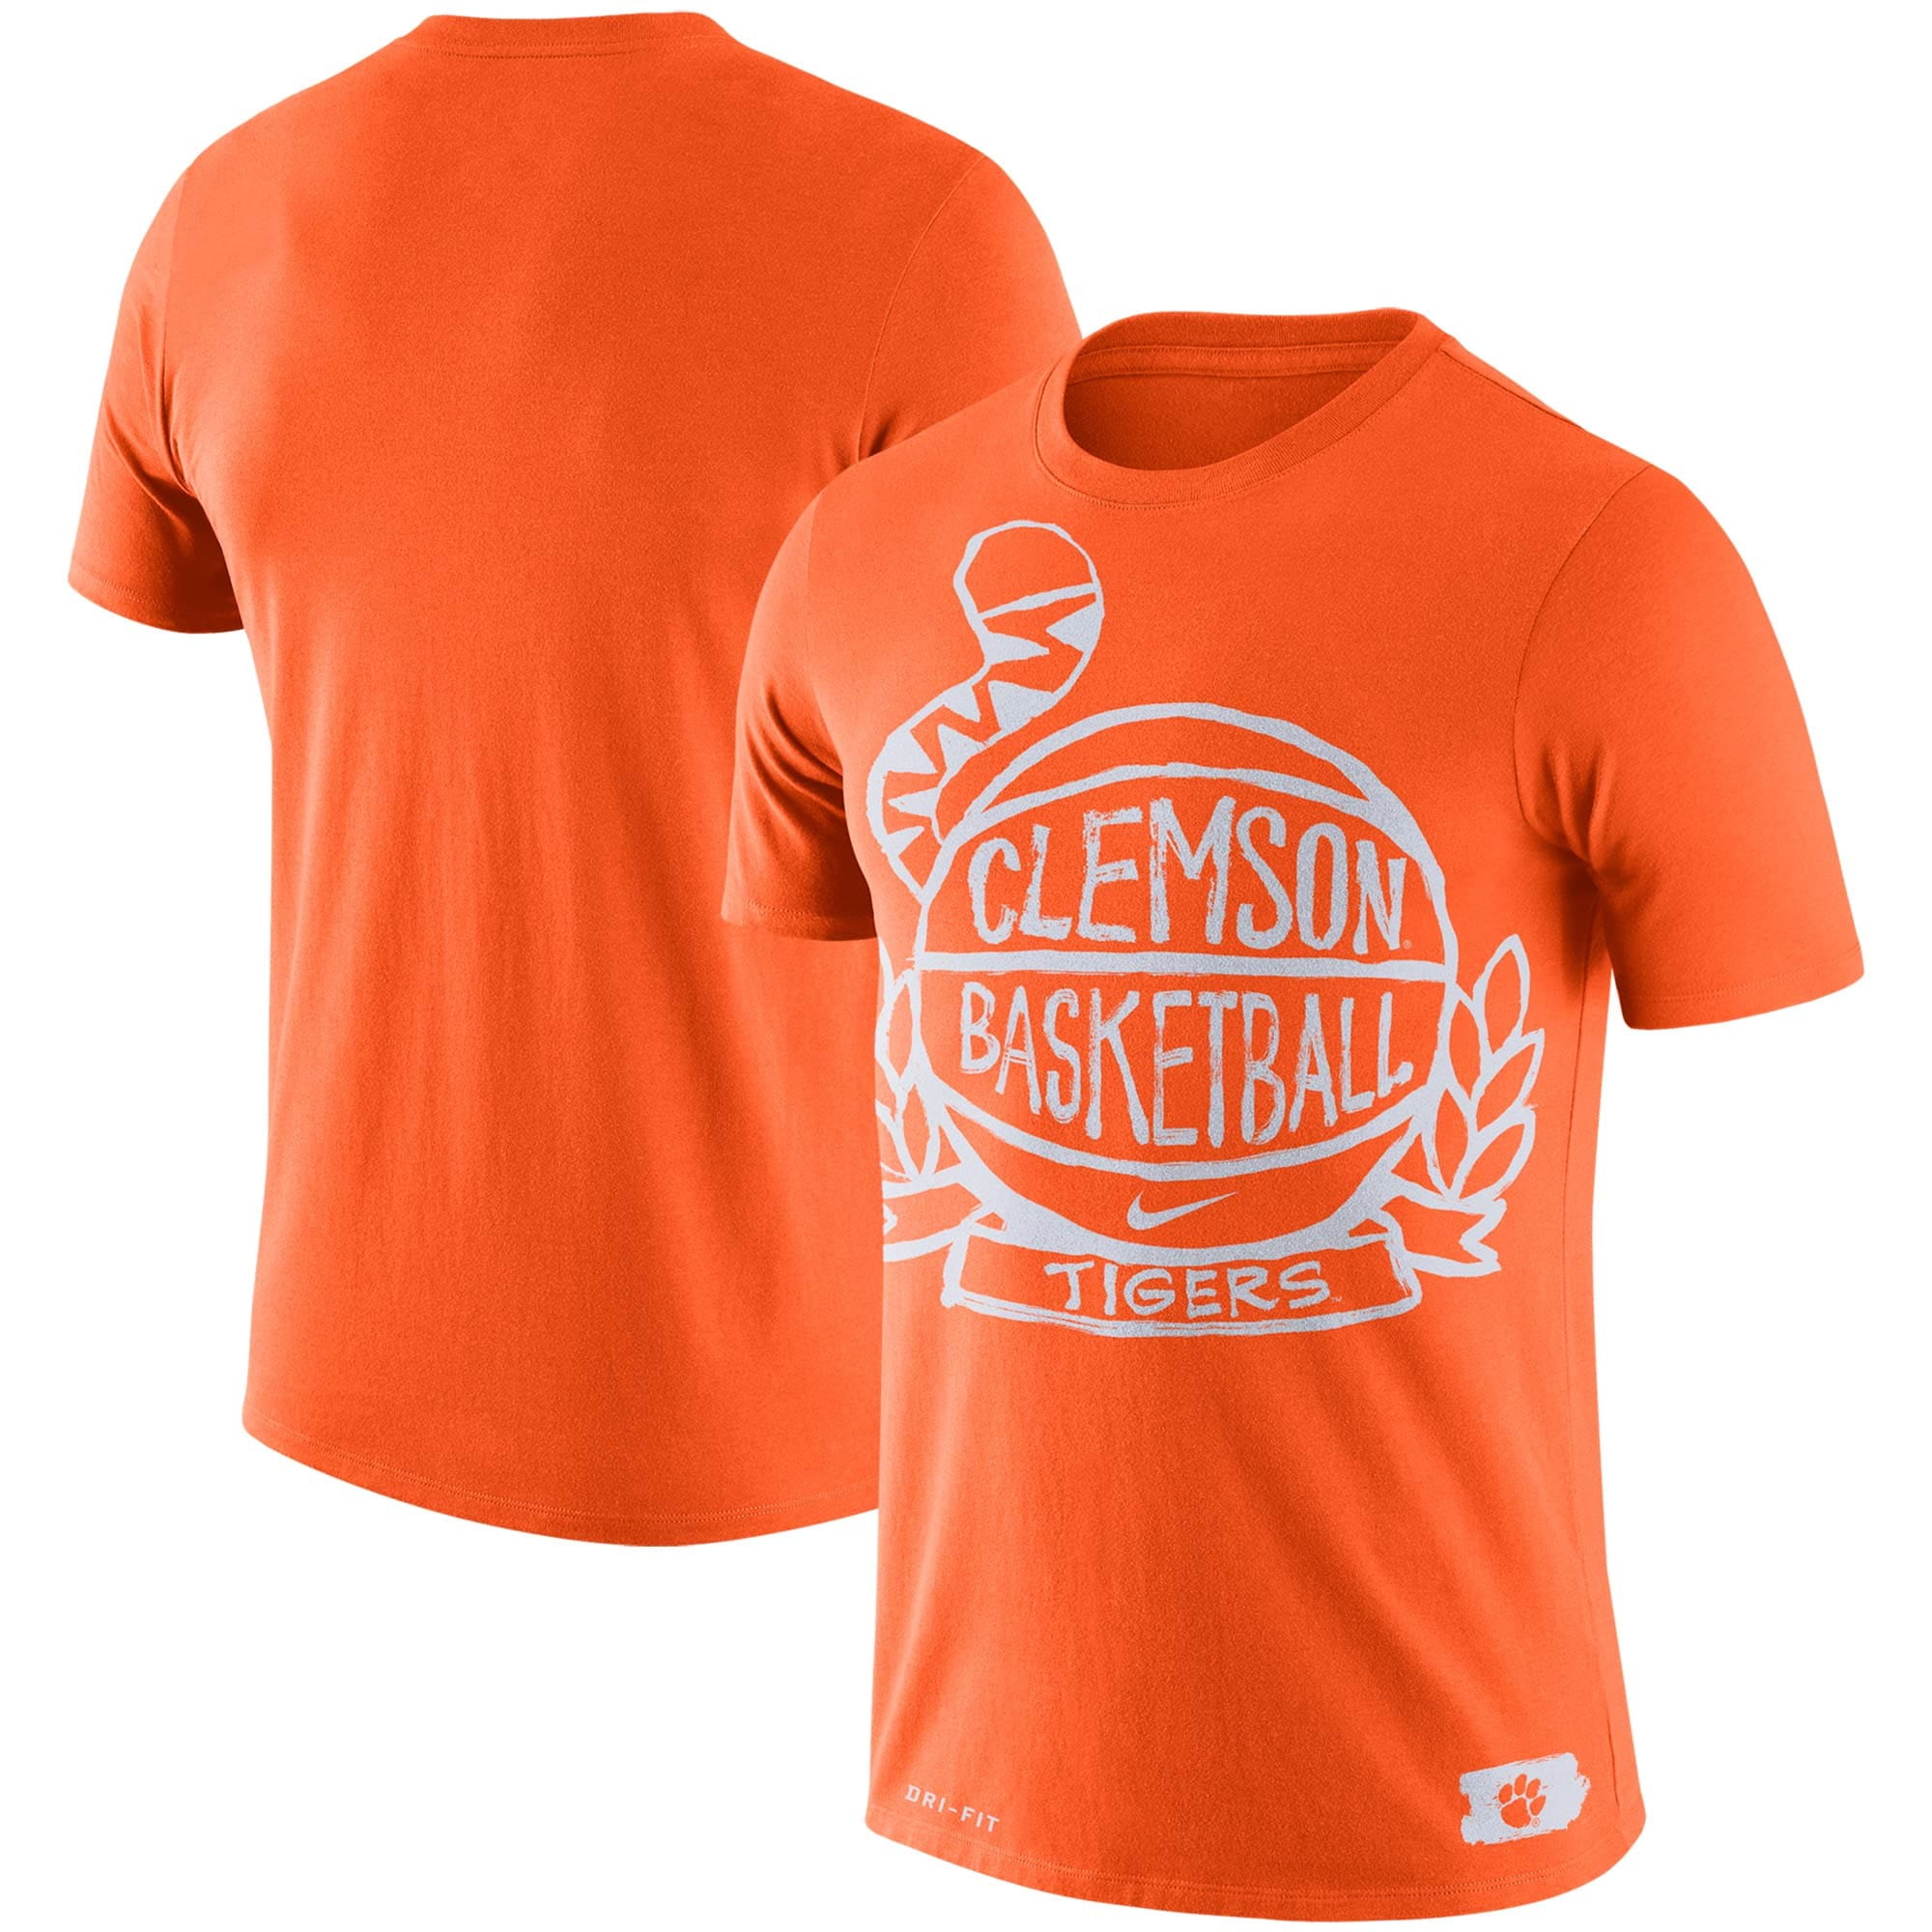 unisex shirt comfortable tees with Francis logo NCAA Basketball team t-shirt